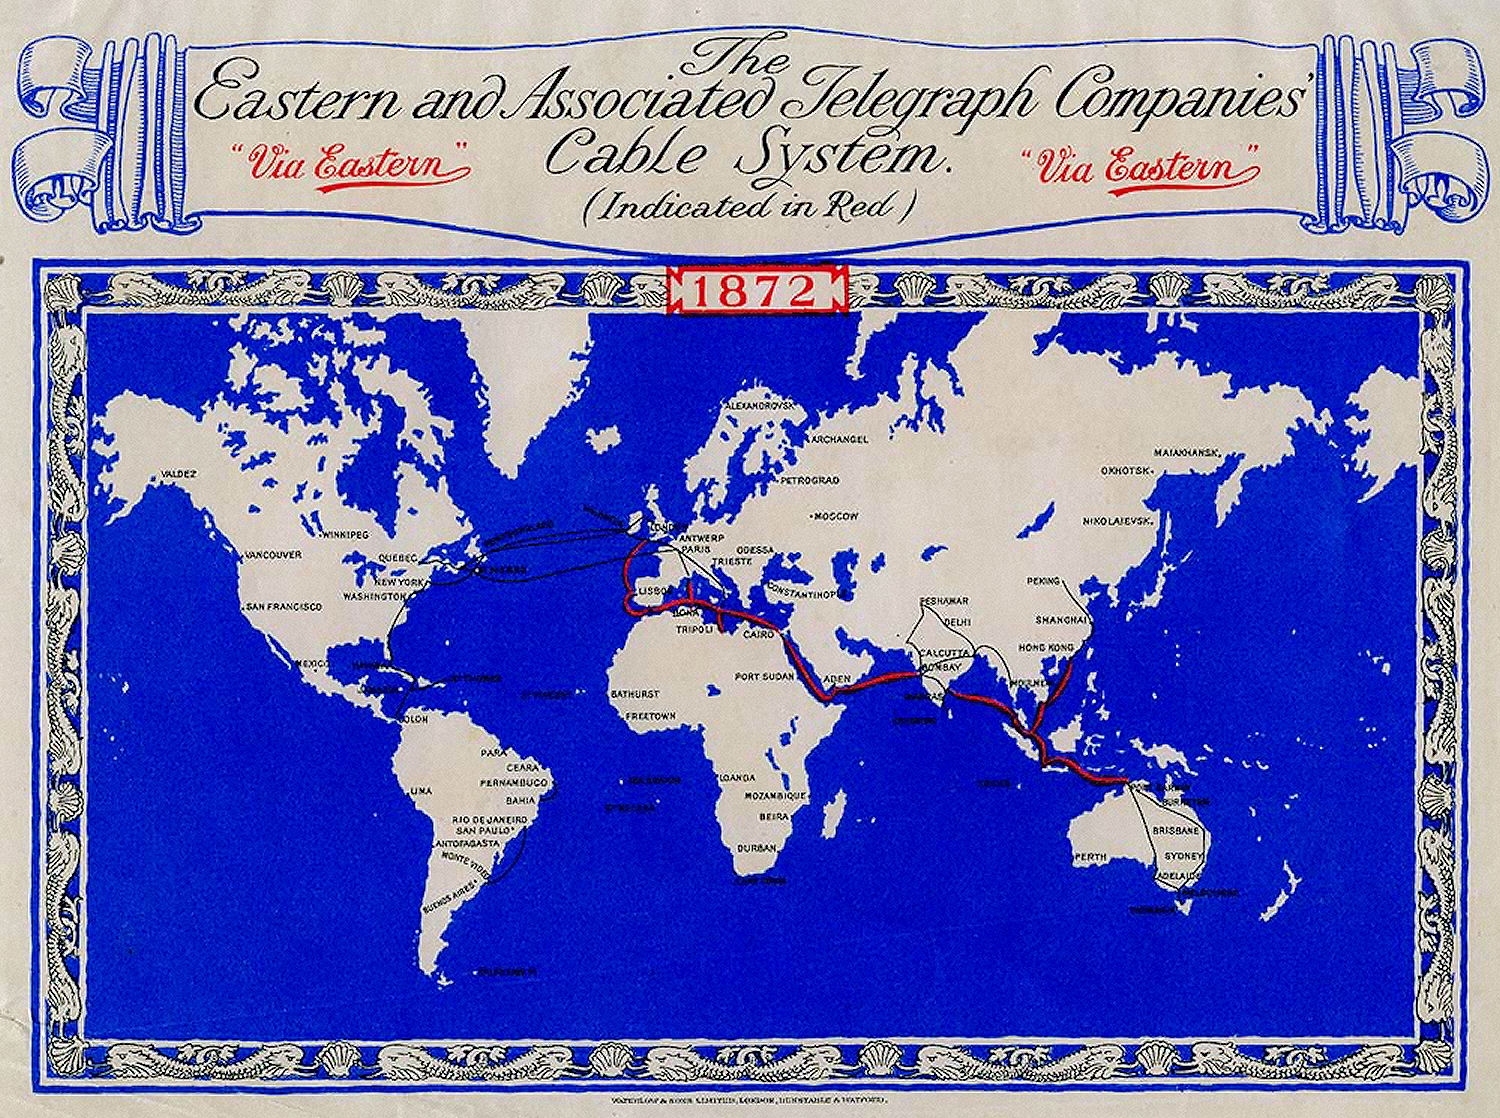 Eastern Associated Telegraph Companies Map 1872